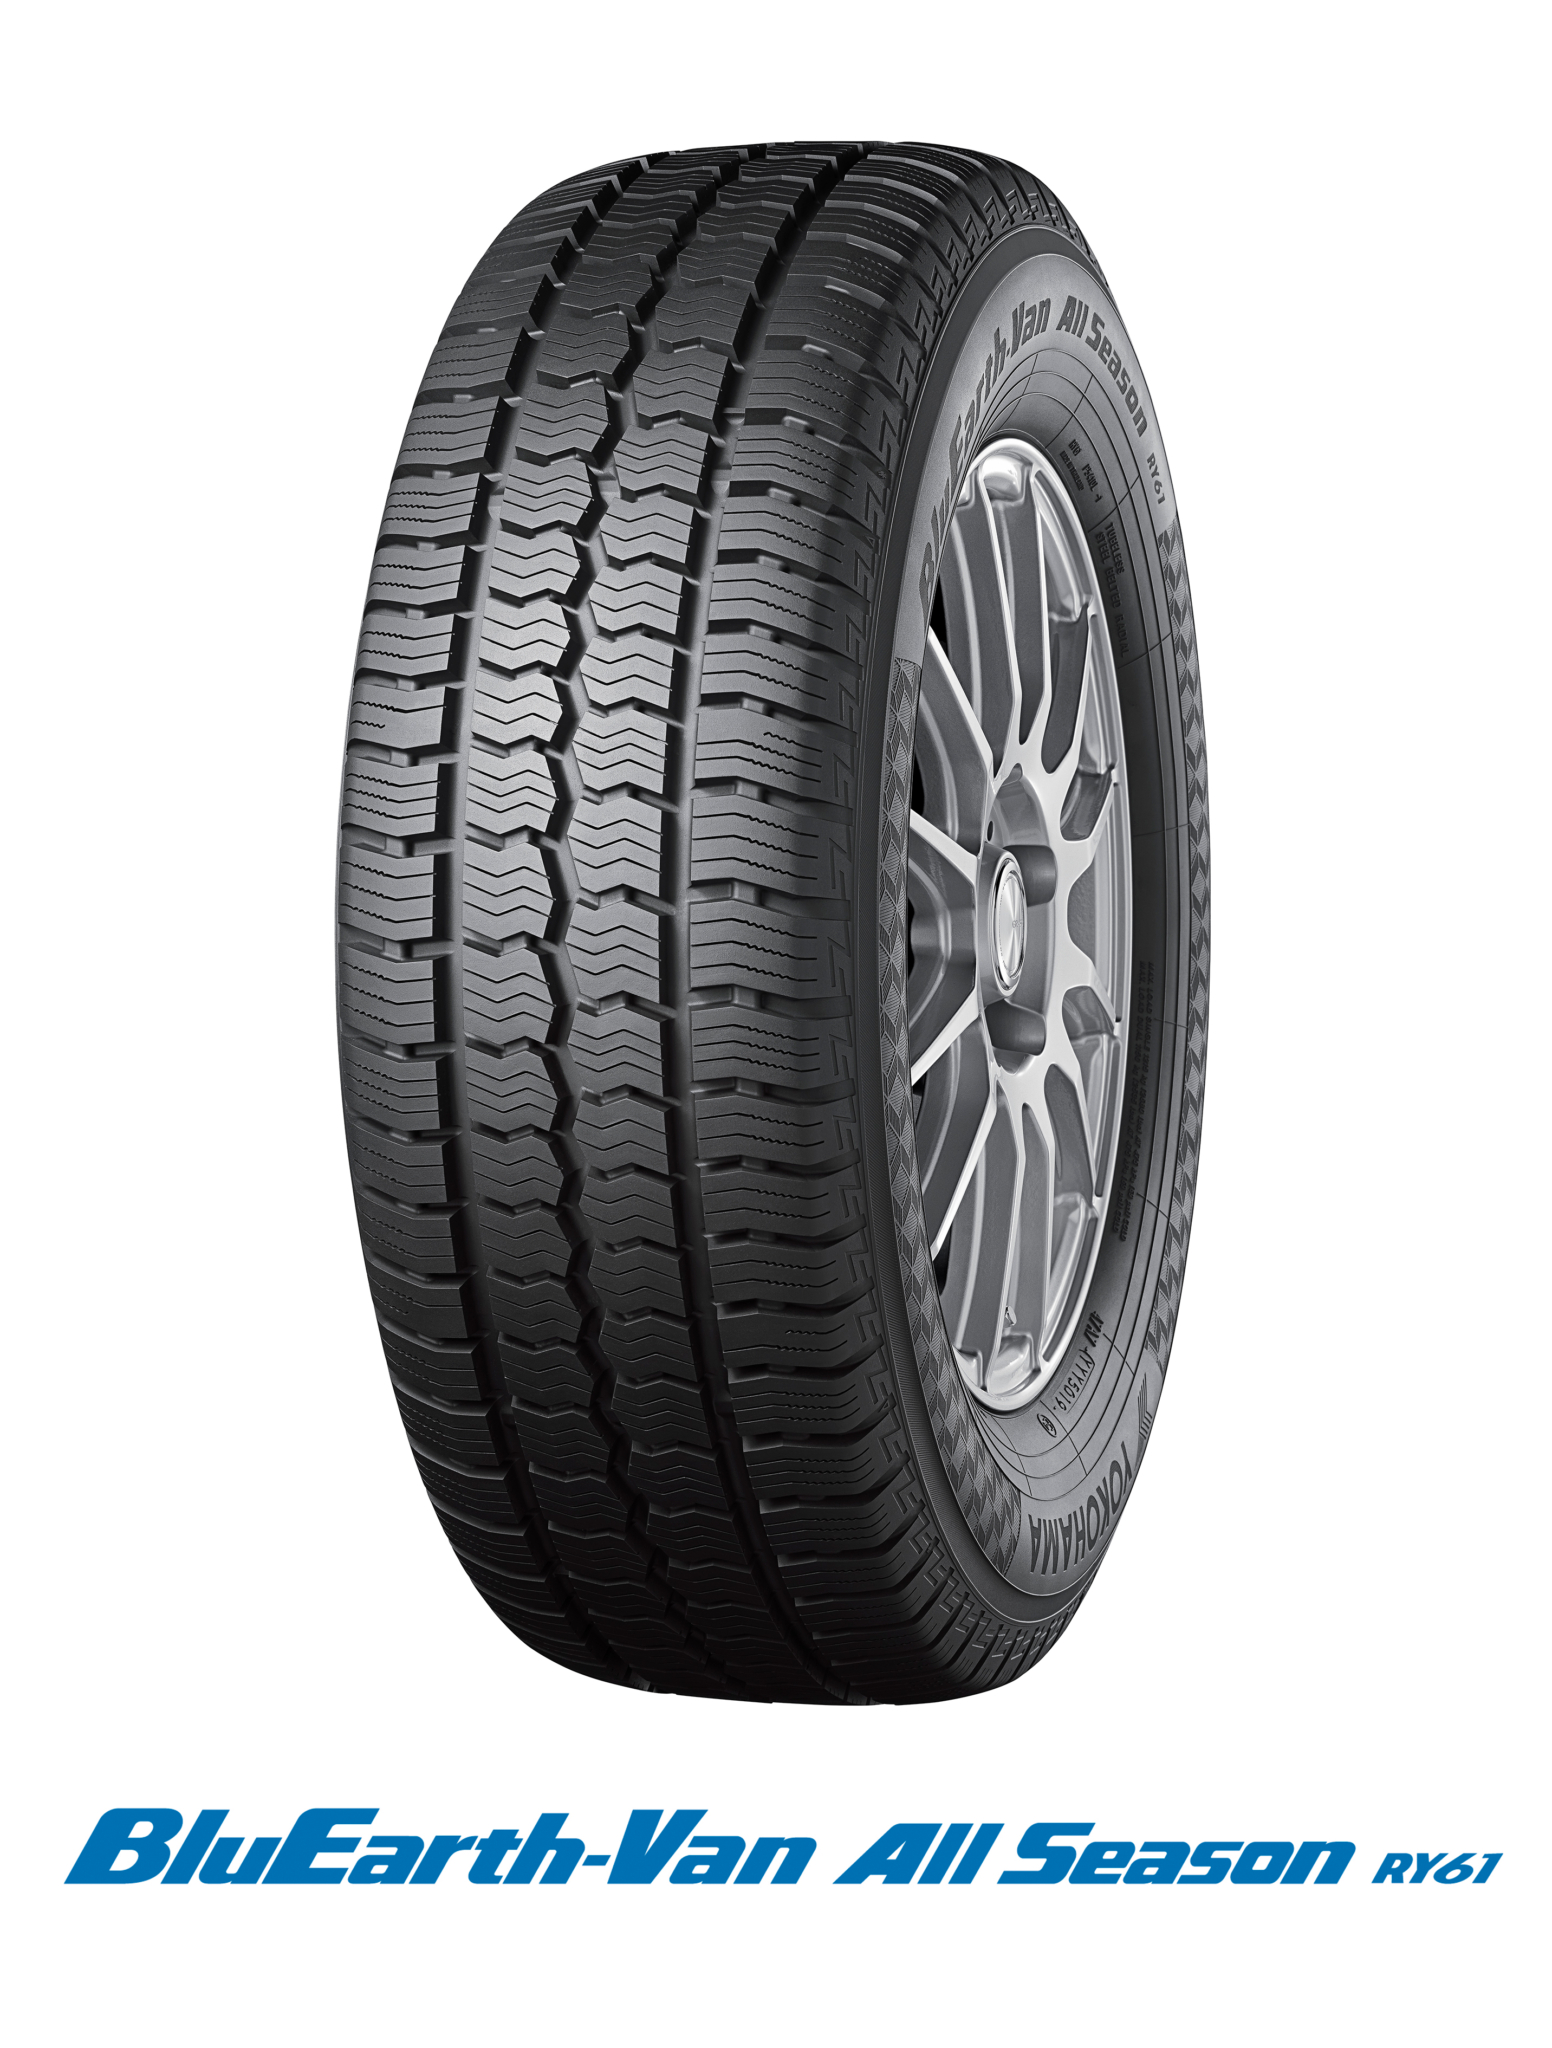 Yokohama launching all-season van tyre in Europe and Russia - Tyrepress